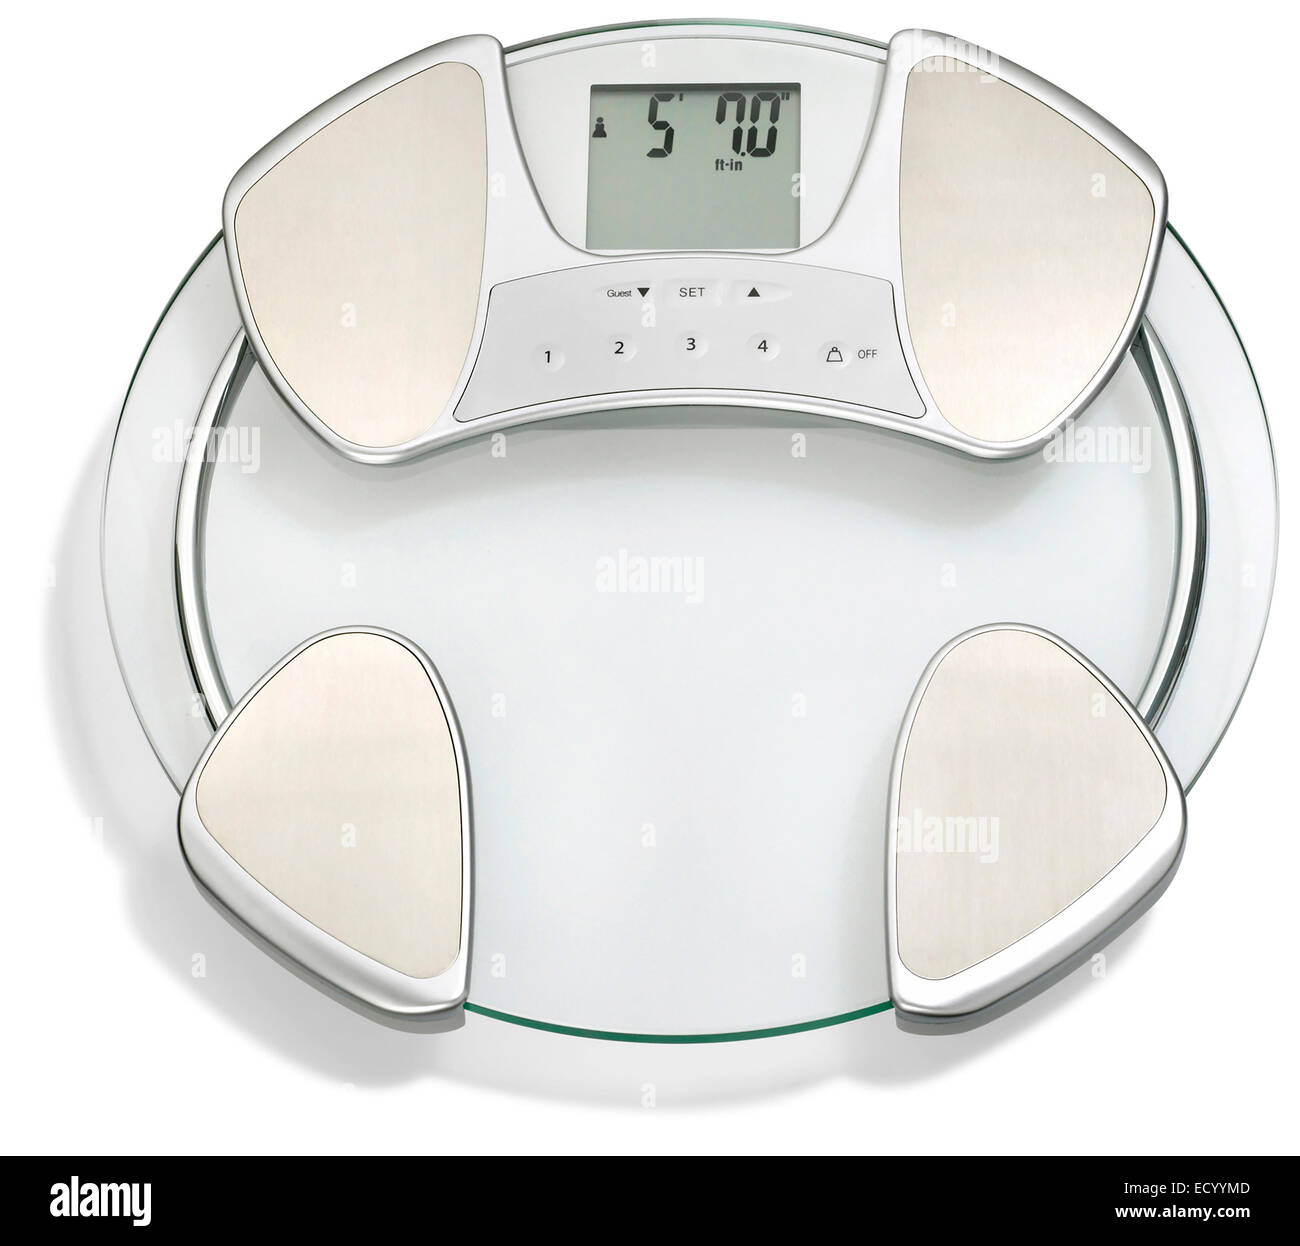 Body fat monitor Stock Photo - Alamy